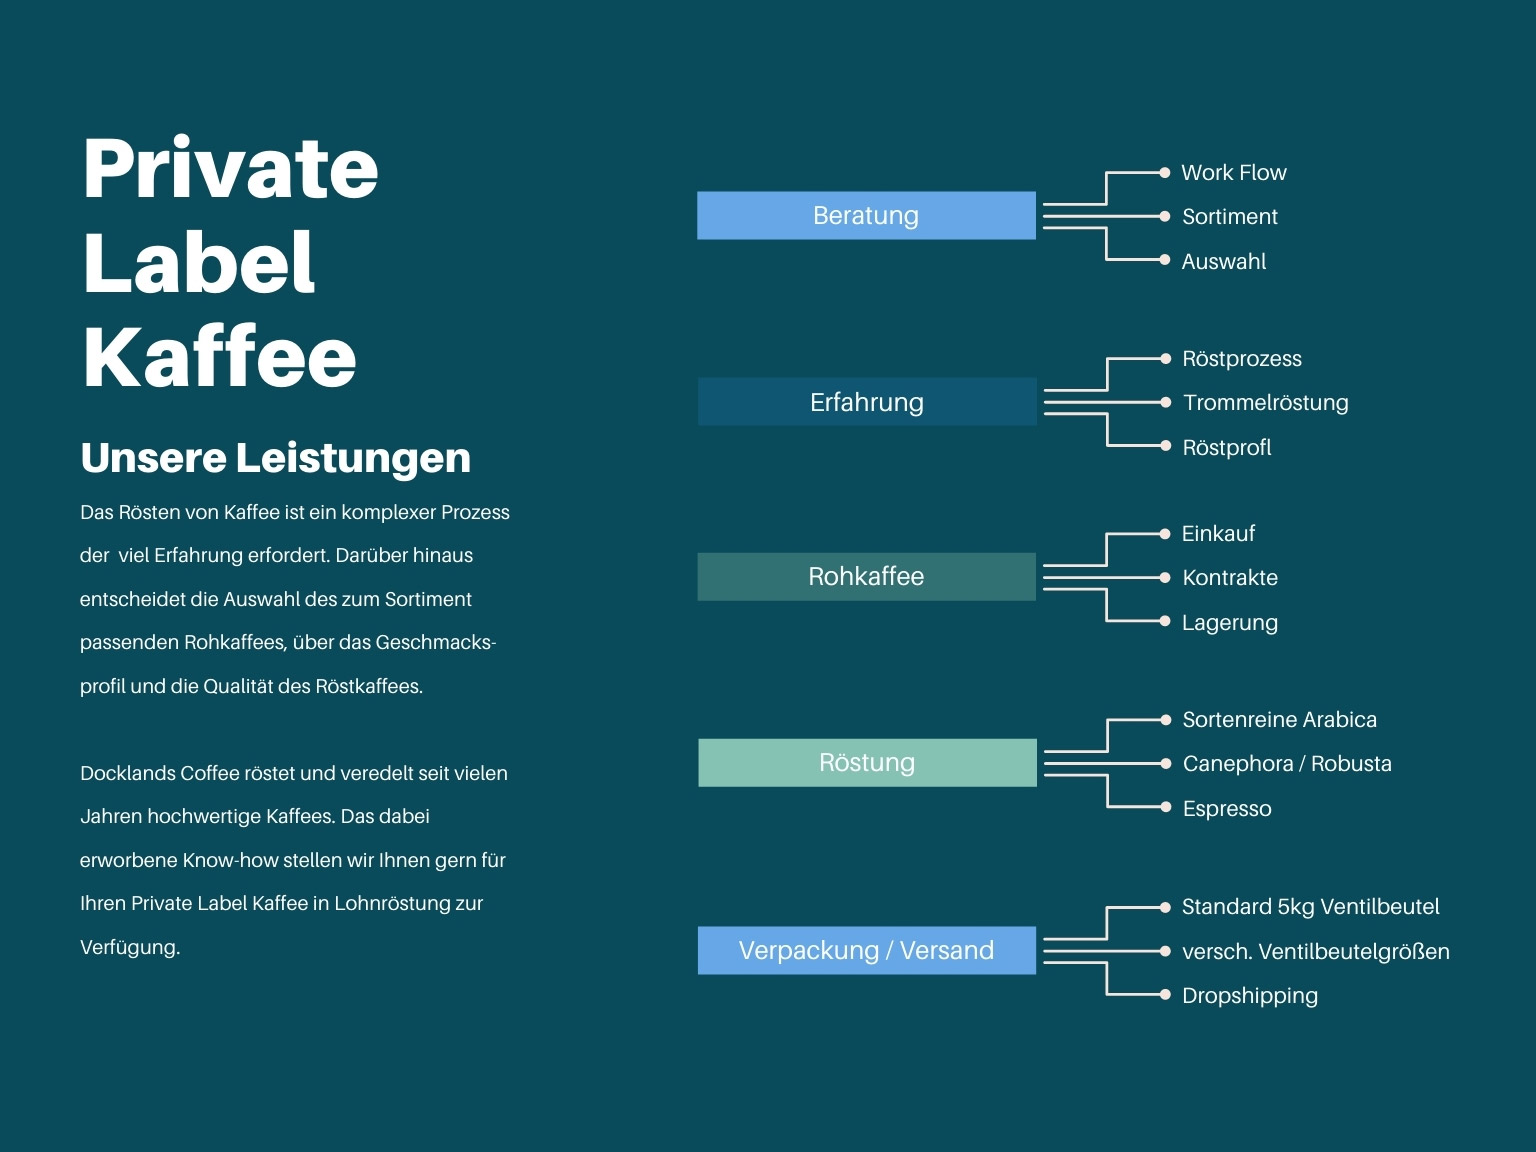 Private Label Kaffee